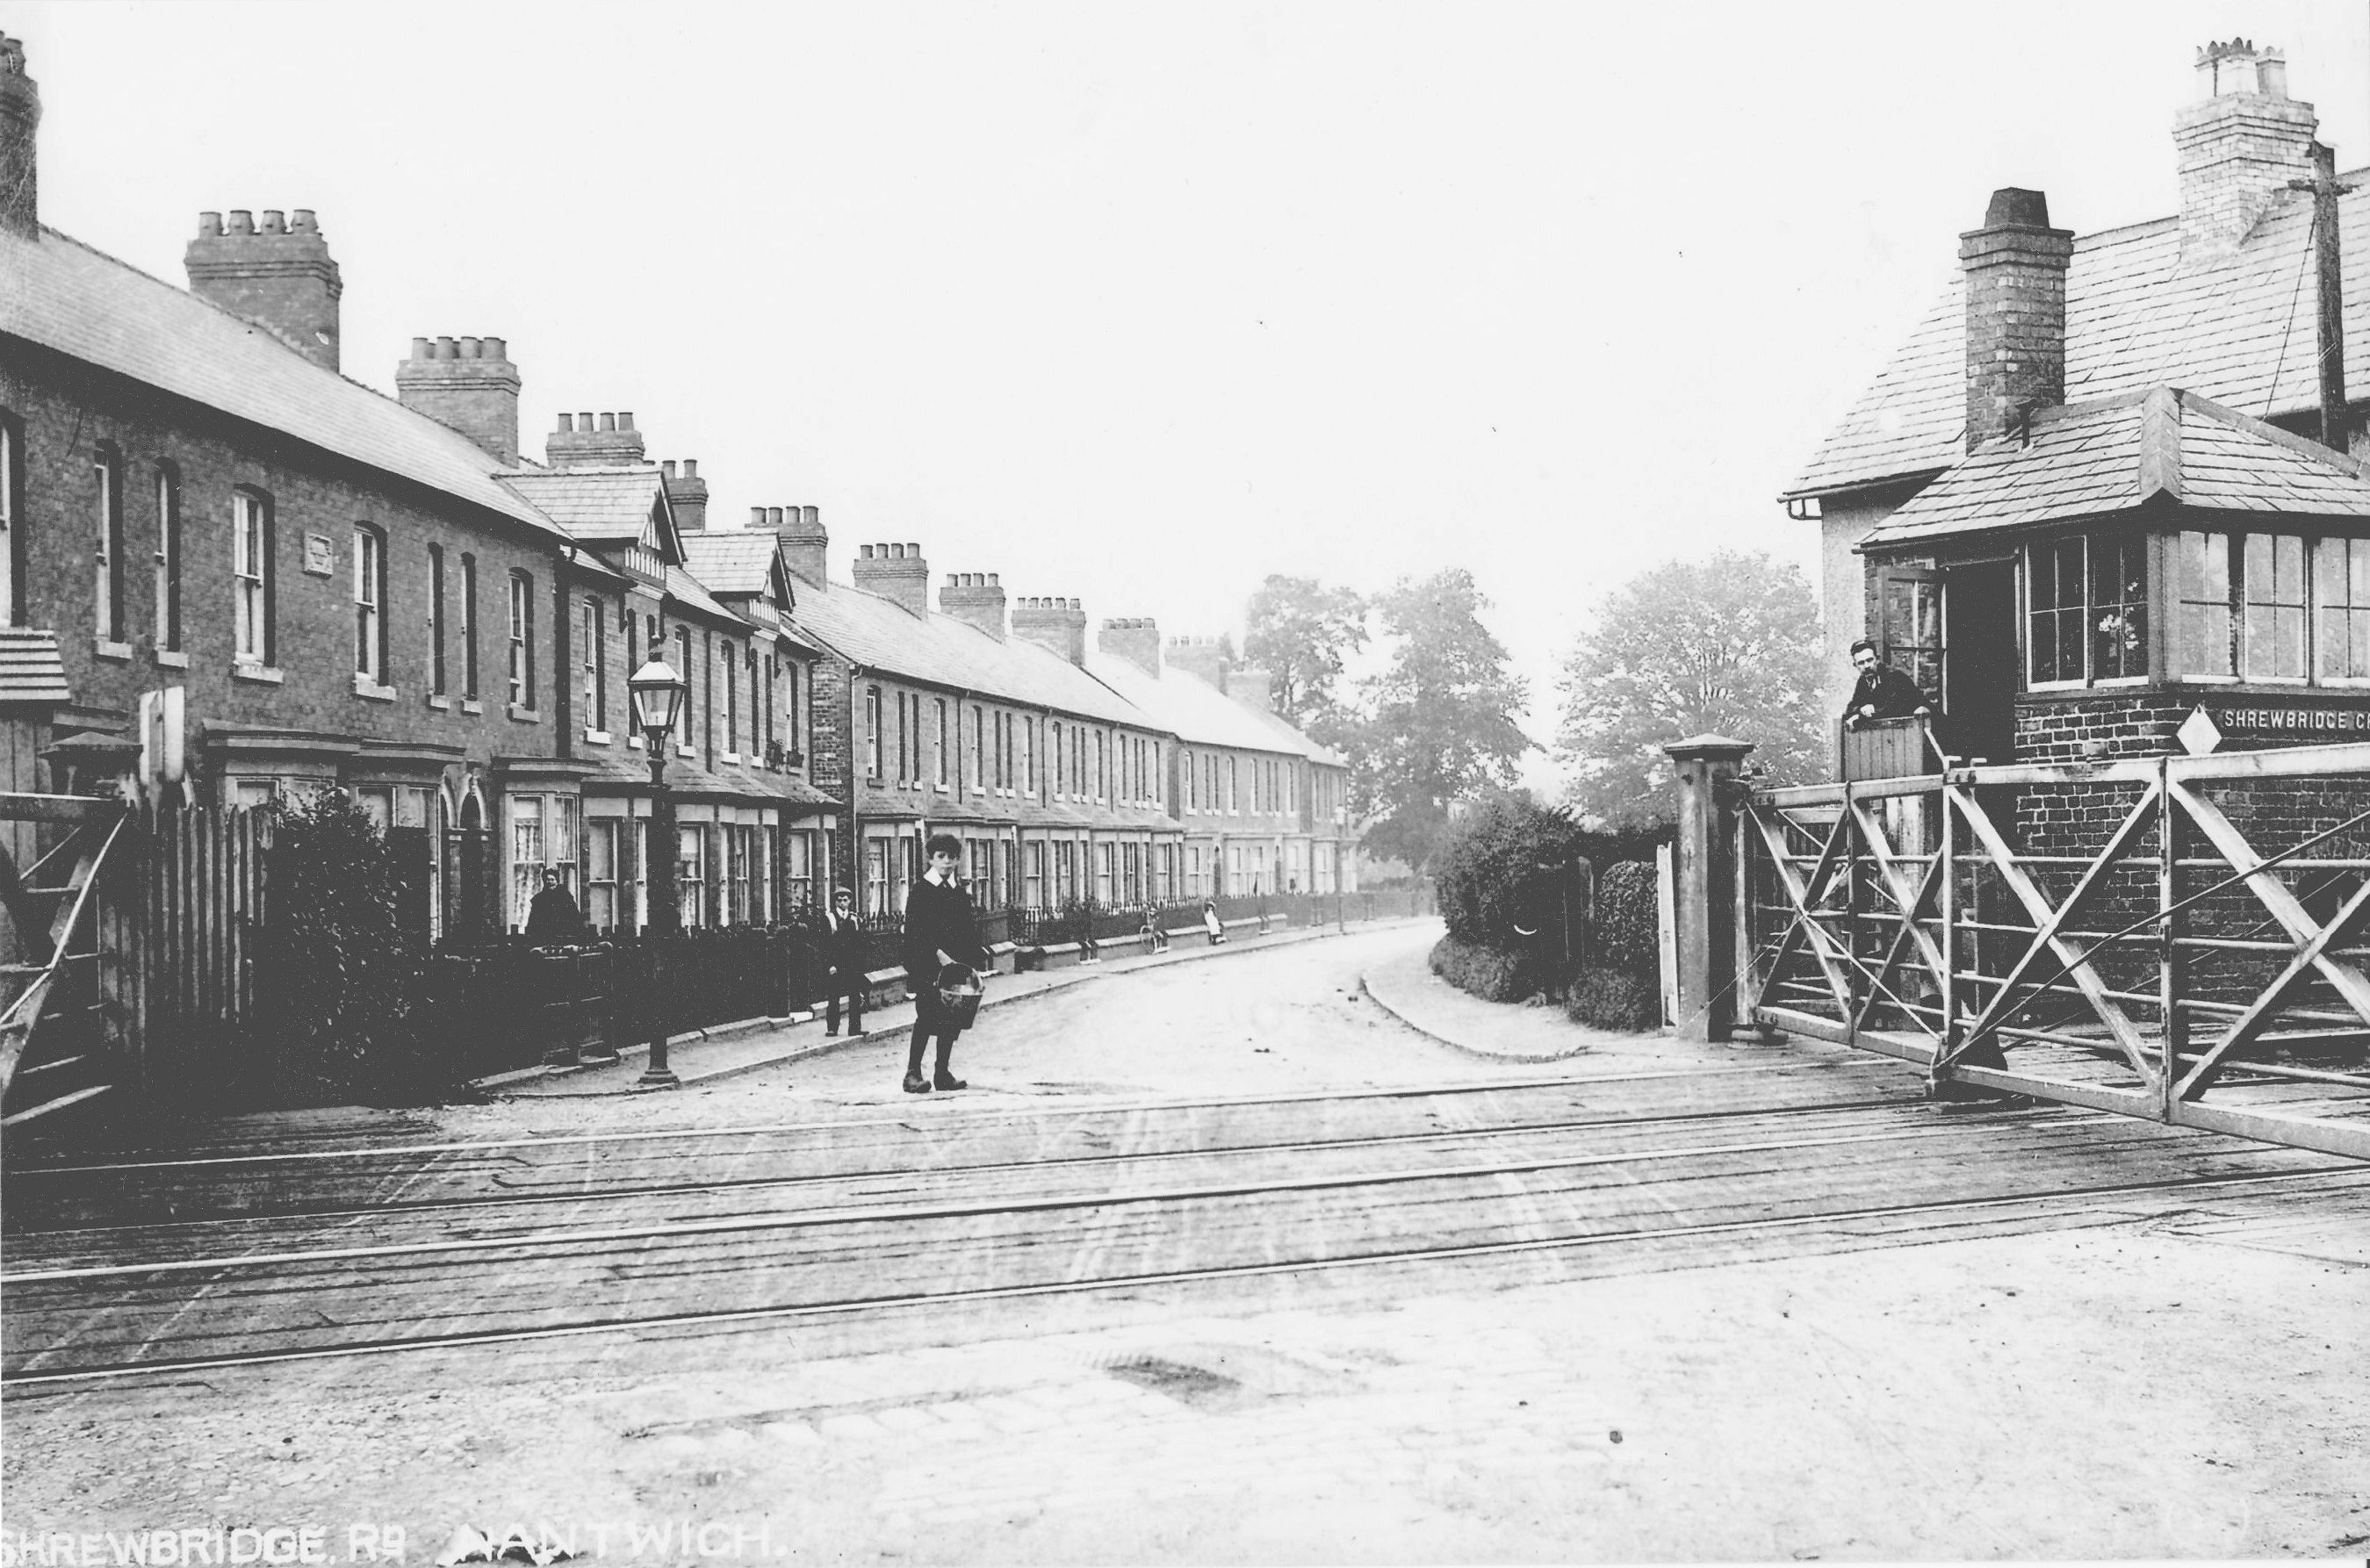 Shrewbridge Road railway crossing in Nantwich, Cheshire